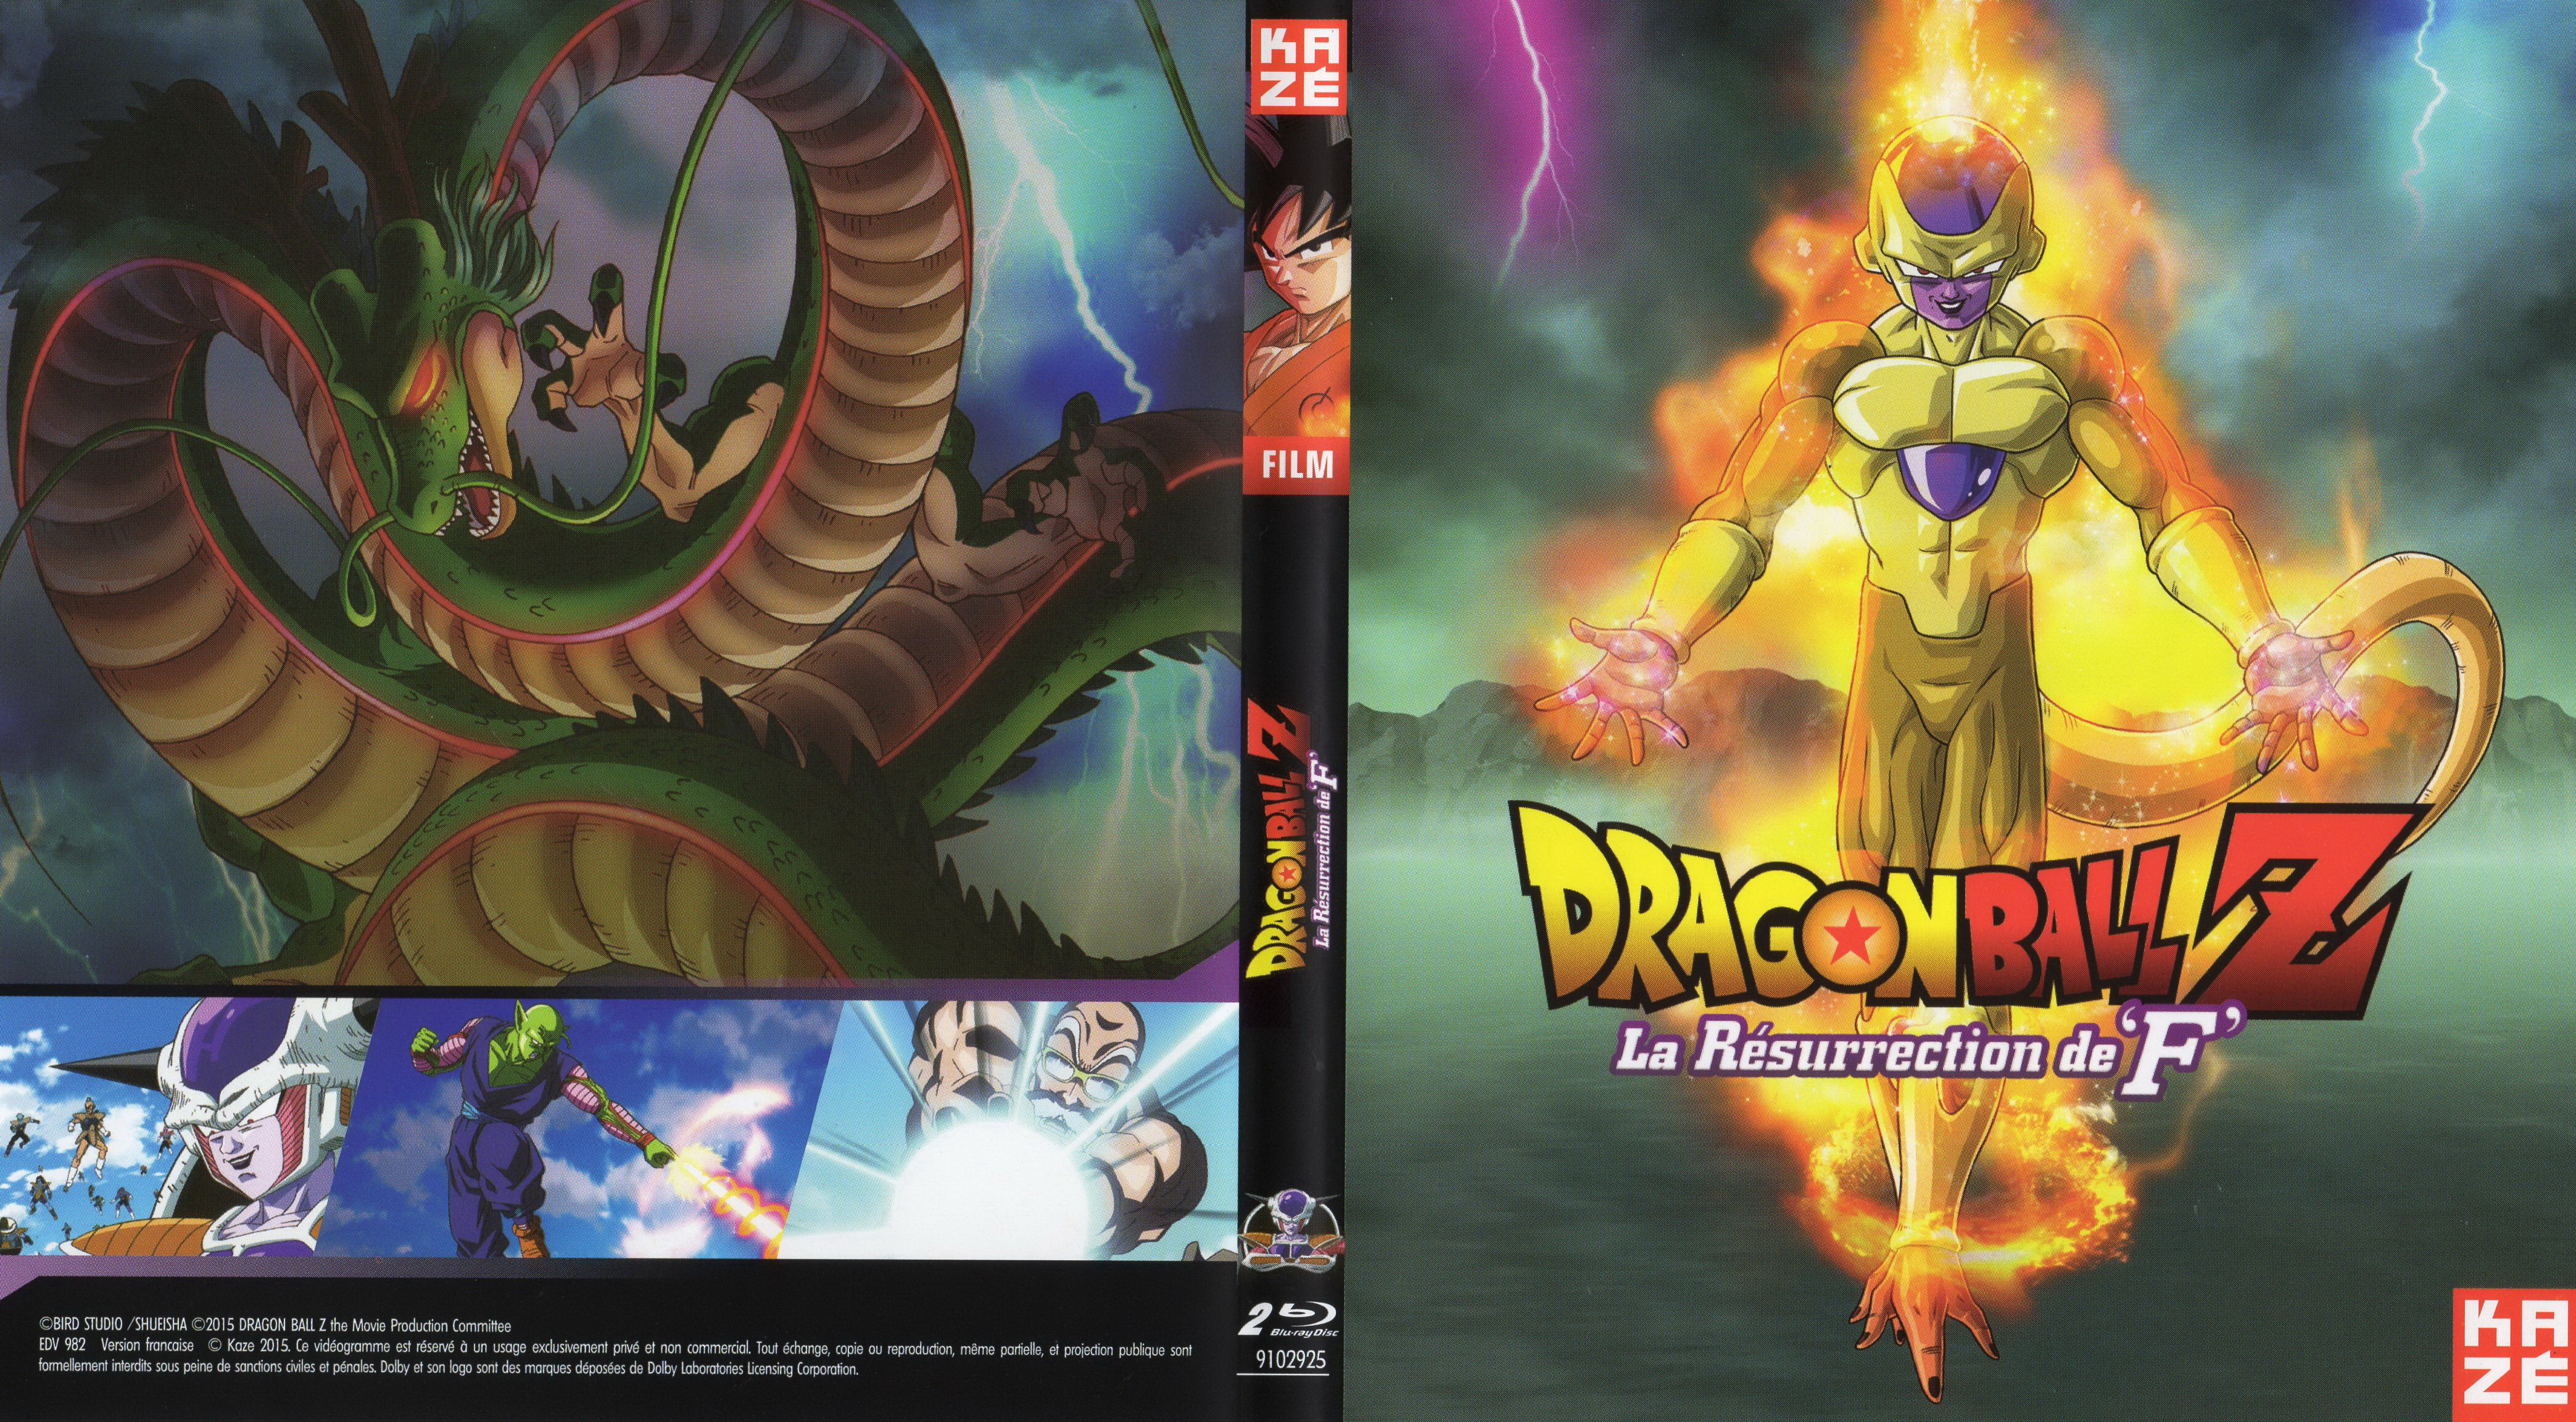 Jaquette DVD DragonBall Z - La resurrection de Freezer v2